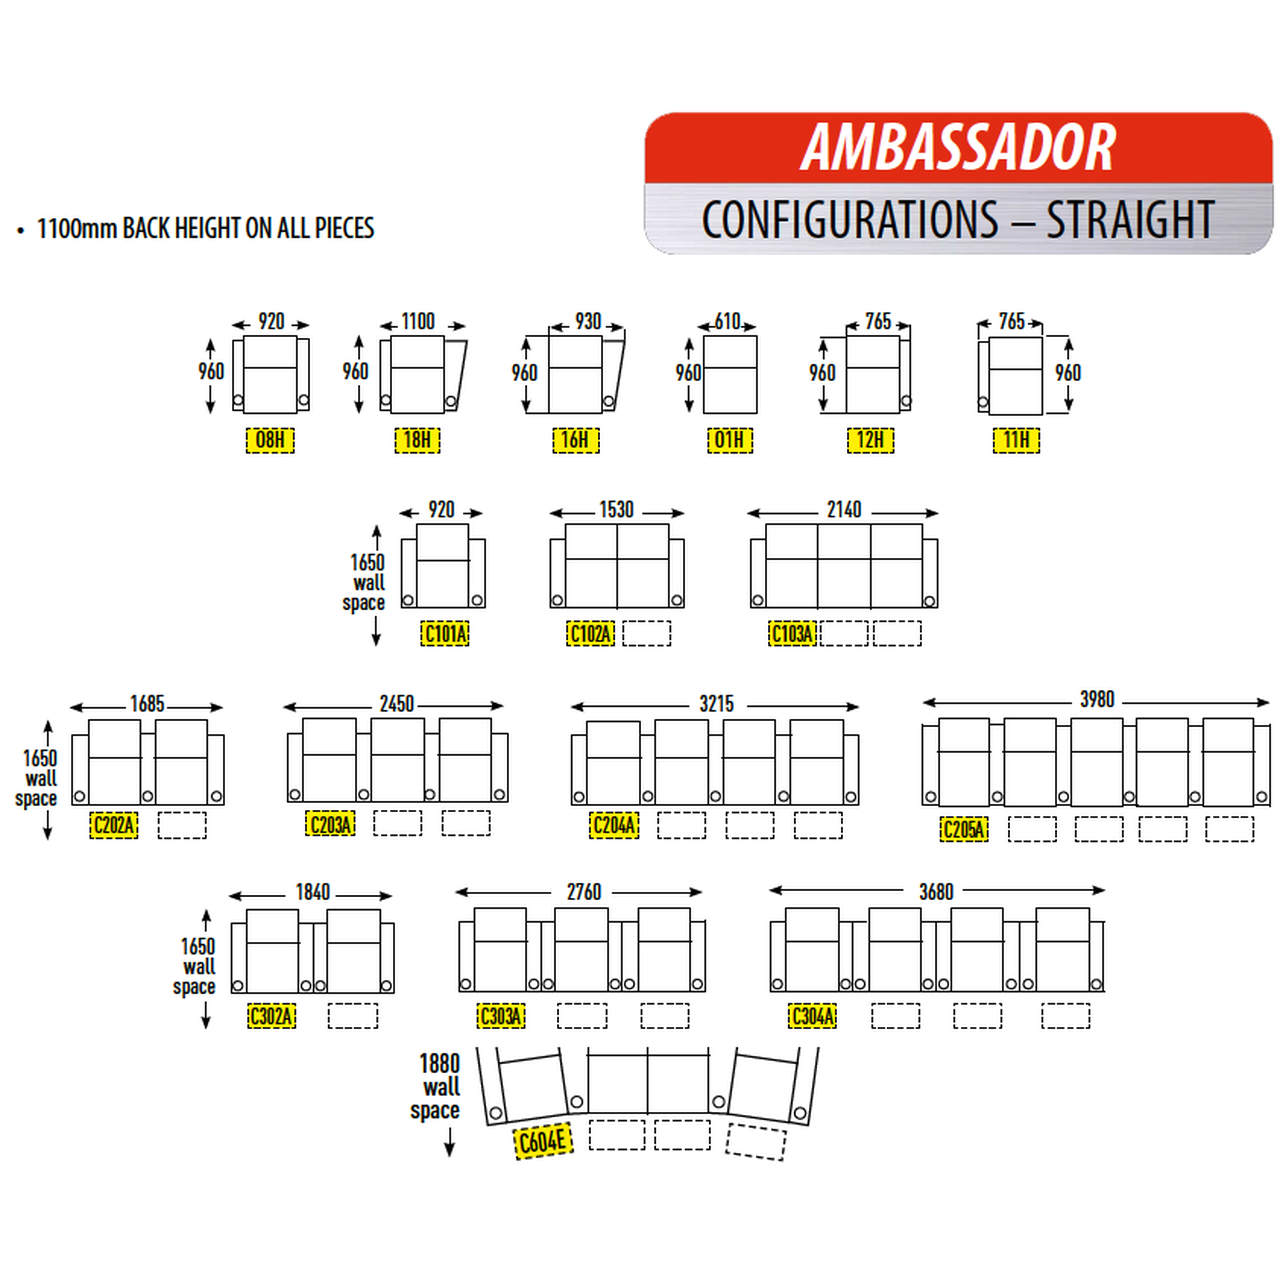 Row One - Ambassador - Configurations (Straight) Australia